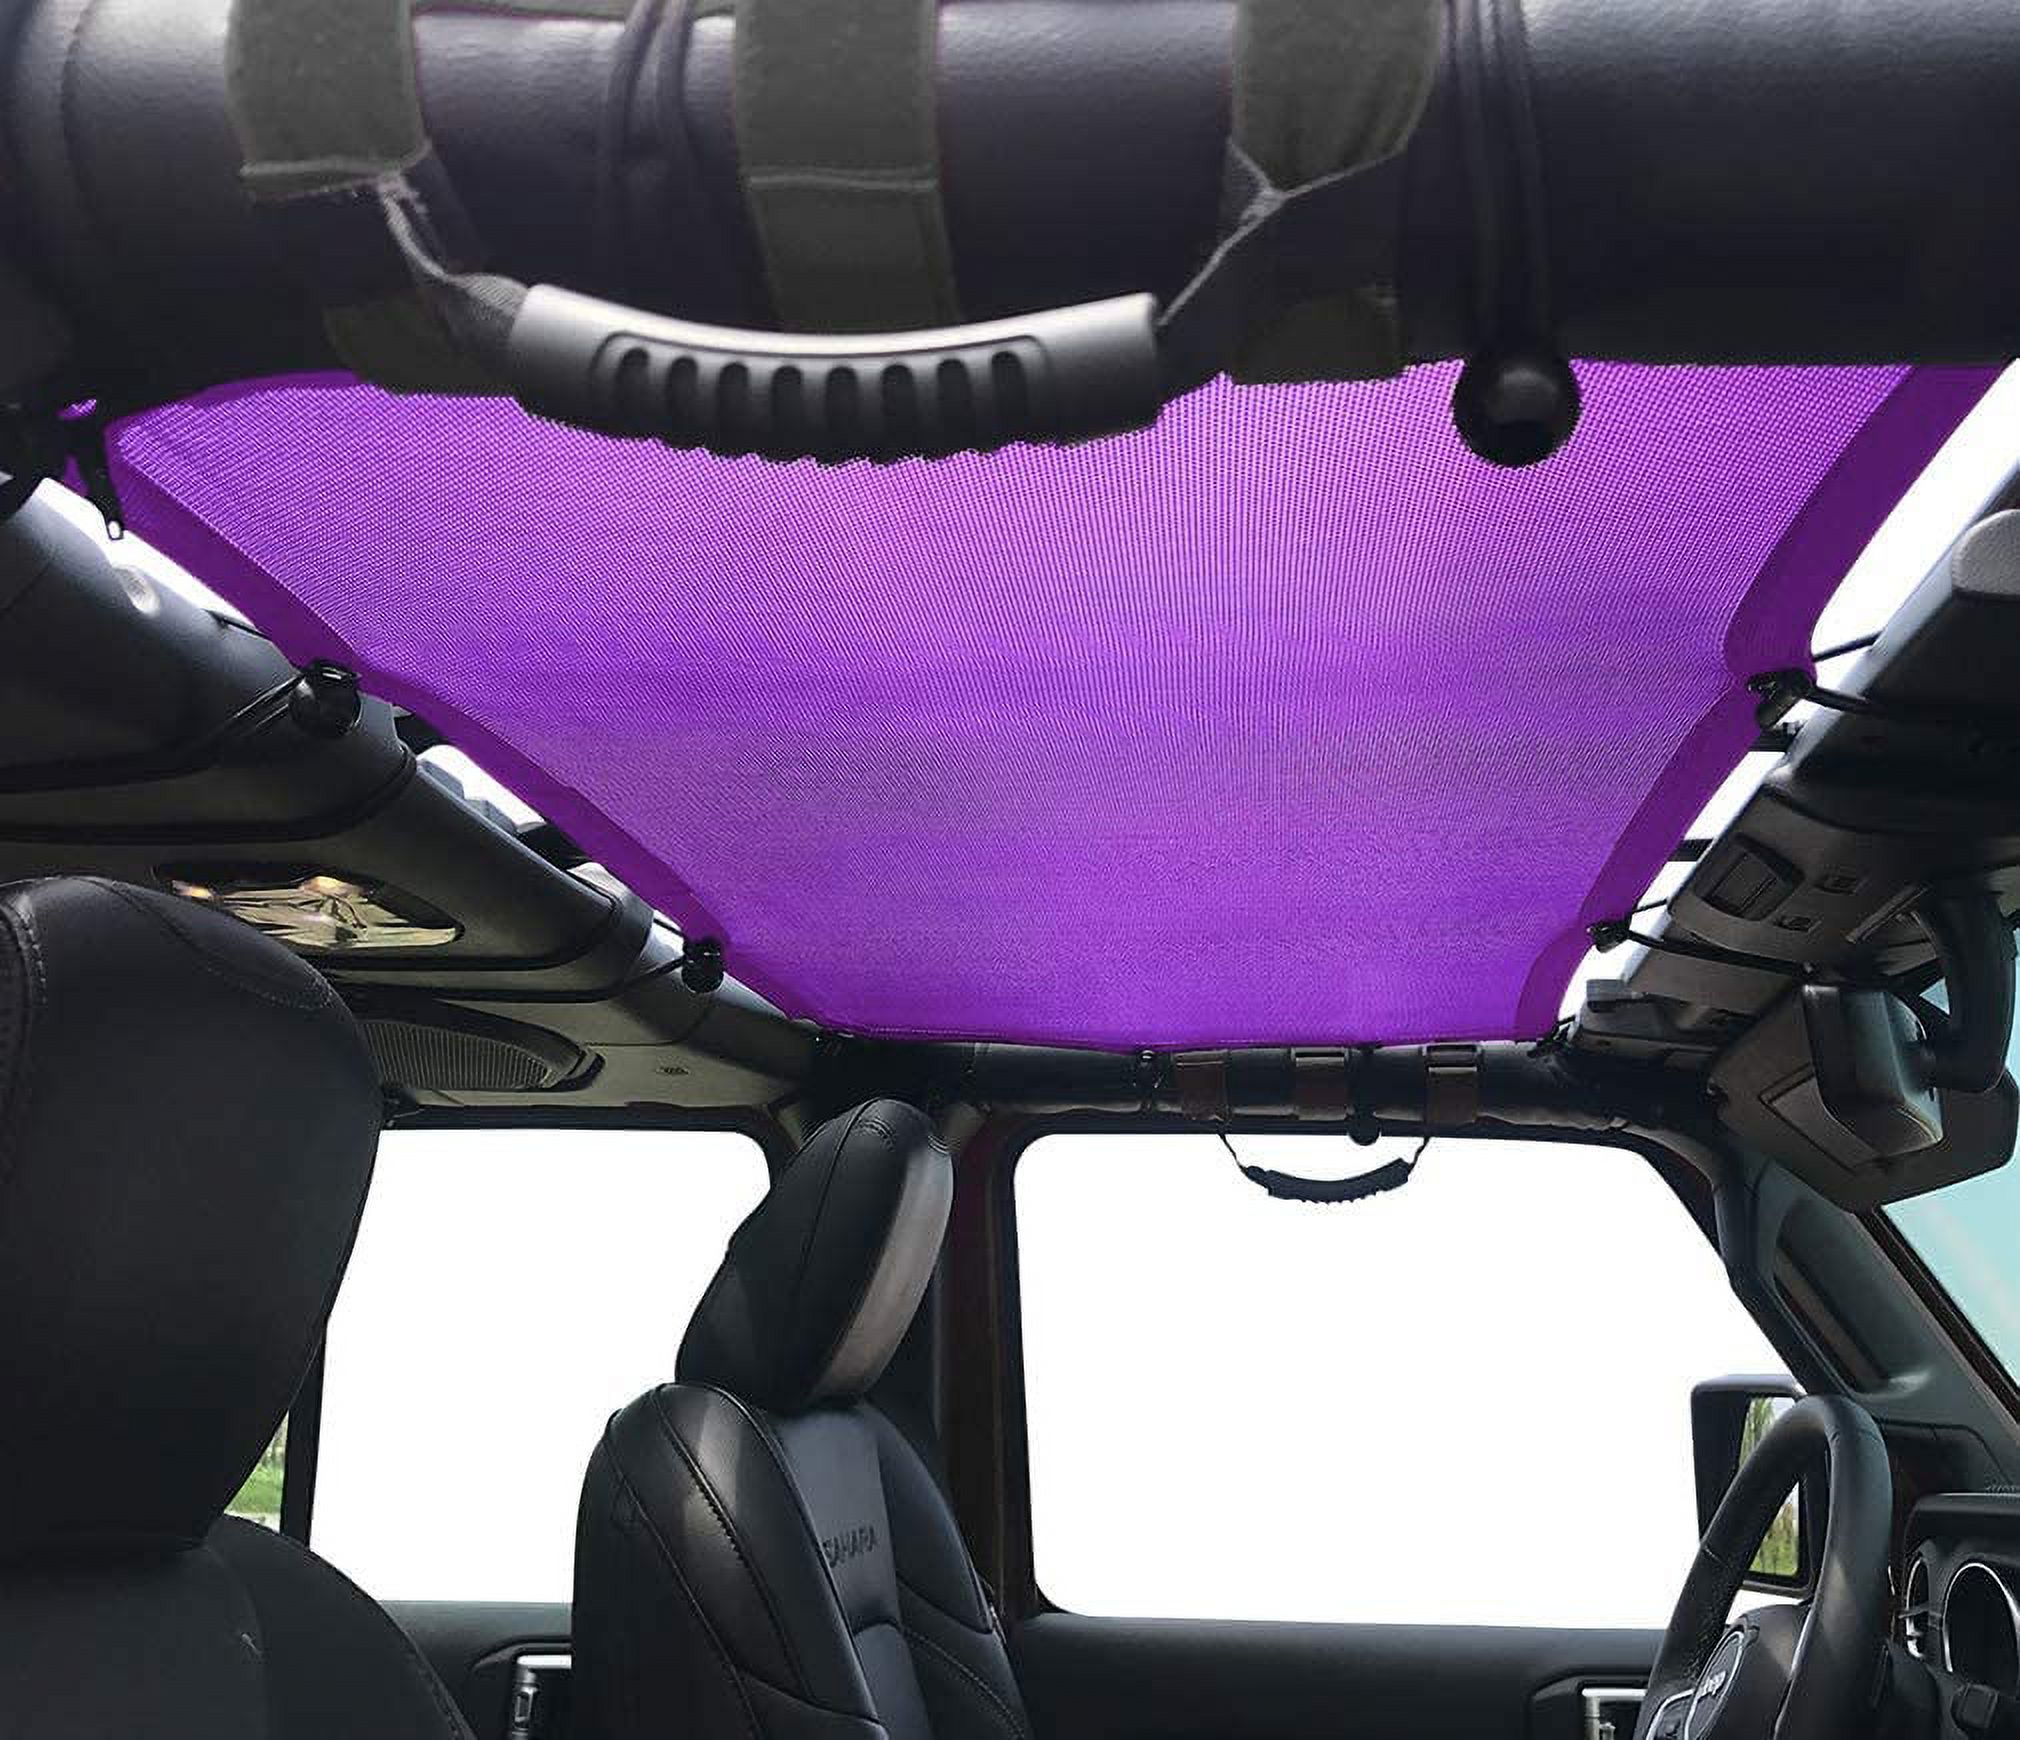 Shadeidea Jeep Gladiator Sunshade JT Door Top Sun Shade Front Purple  Mesh Screen Wrangler Cover UV Blocker with GrabBag Pouch 2018 2019 2020 -10  Years Warranty